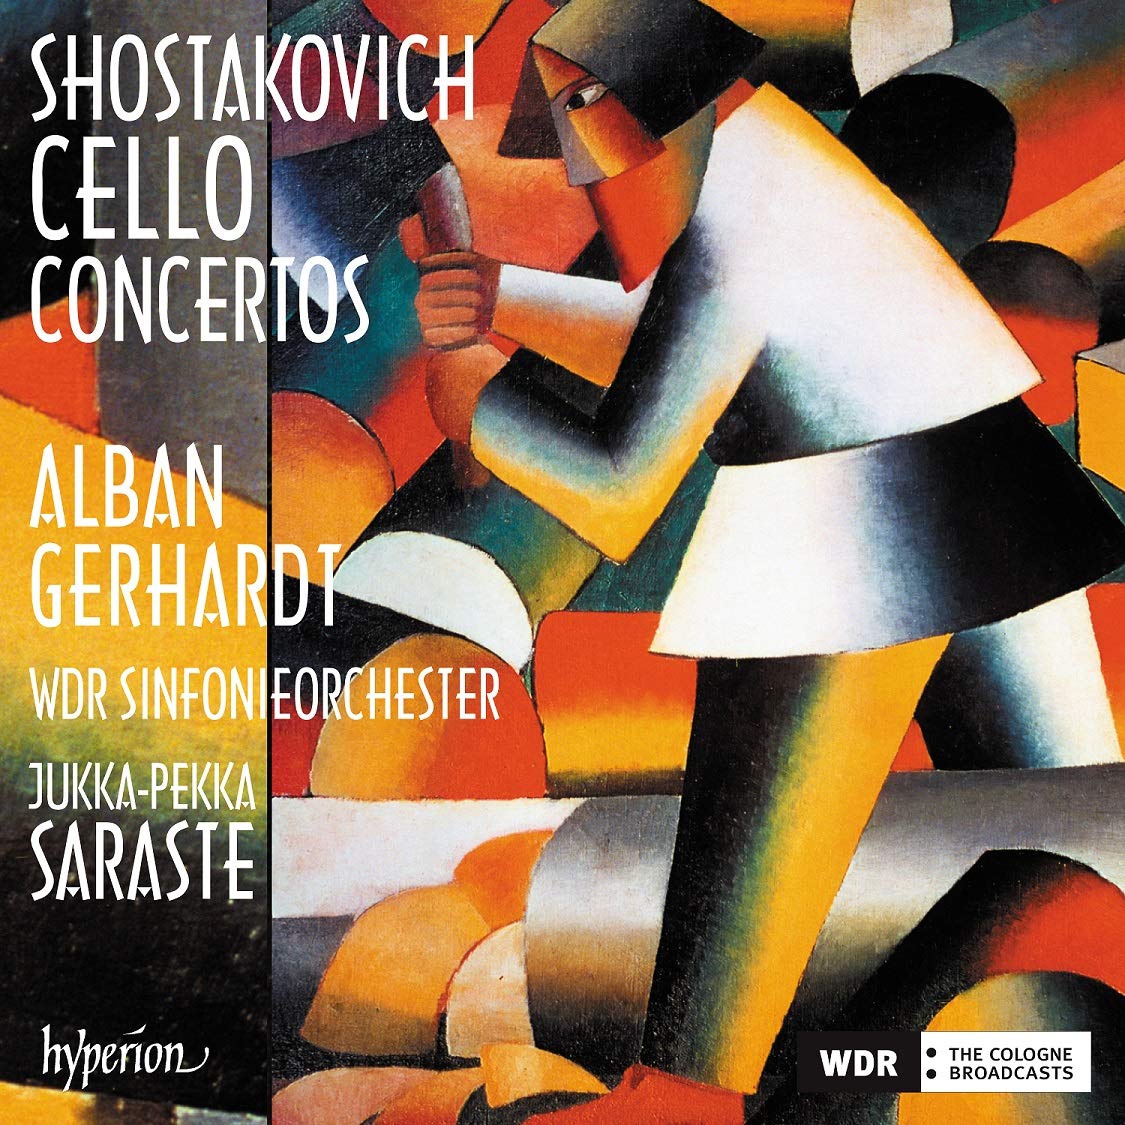 Alban Gerhardt, WDR Sinfonieorchester & Jukka-Pekka Saraste – Shostakovich: Cello Concertos (2020) [FLAC 24bit/96kHz]